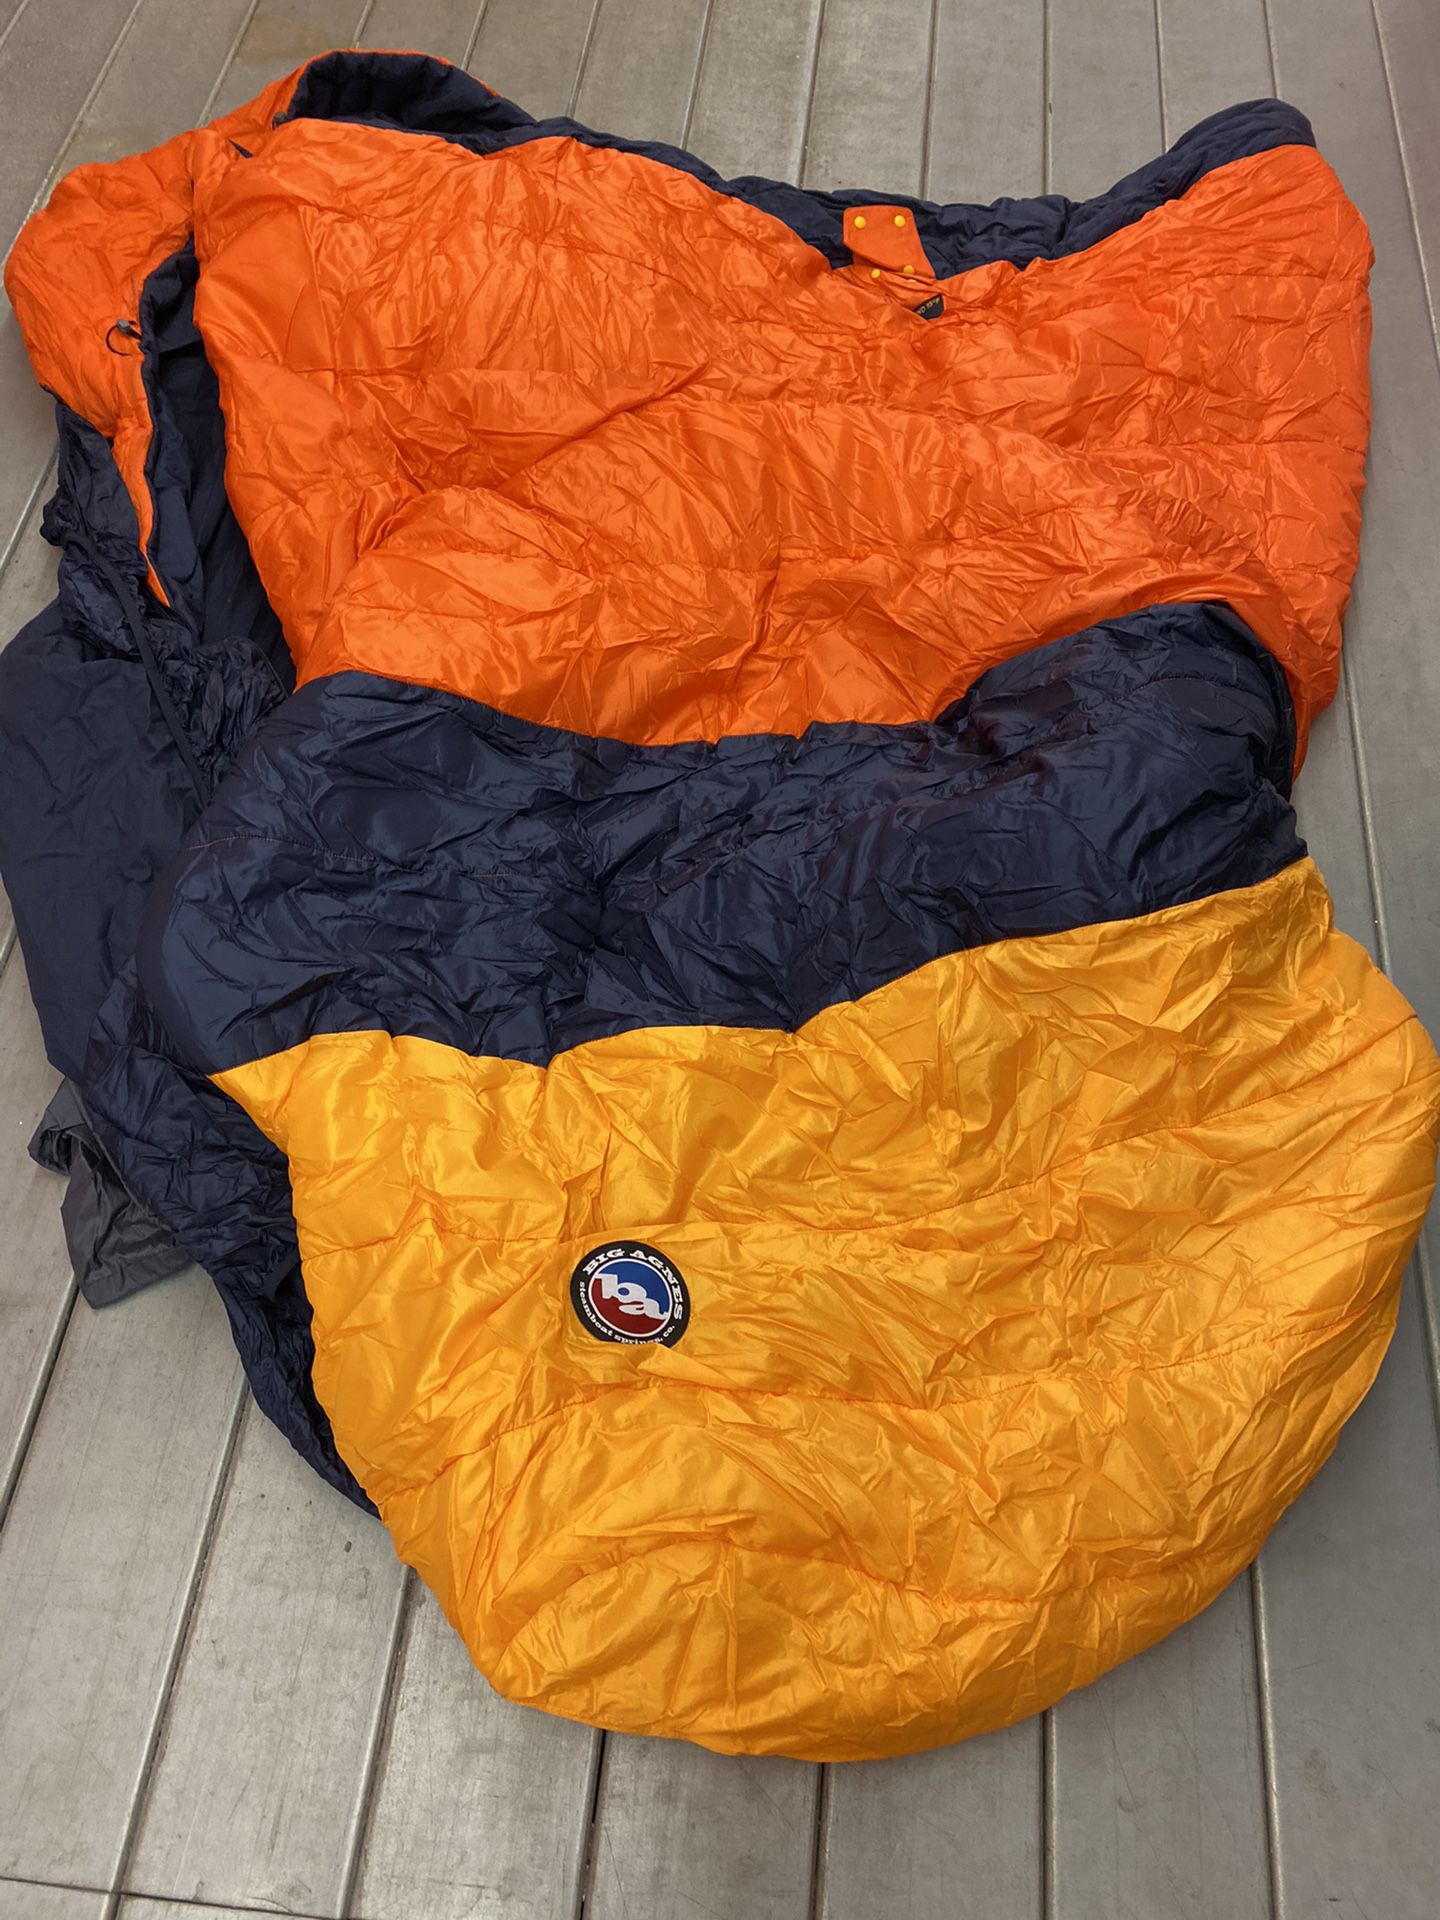 Big Agnes Dream Island 15 degree double sleeping bag